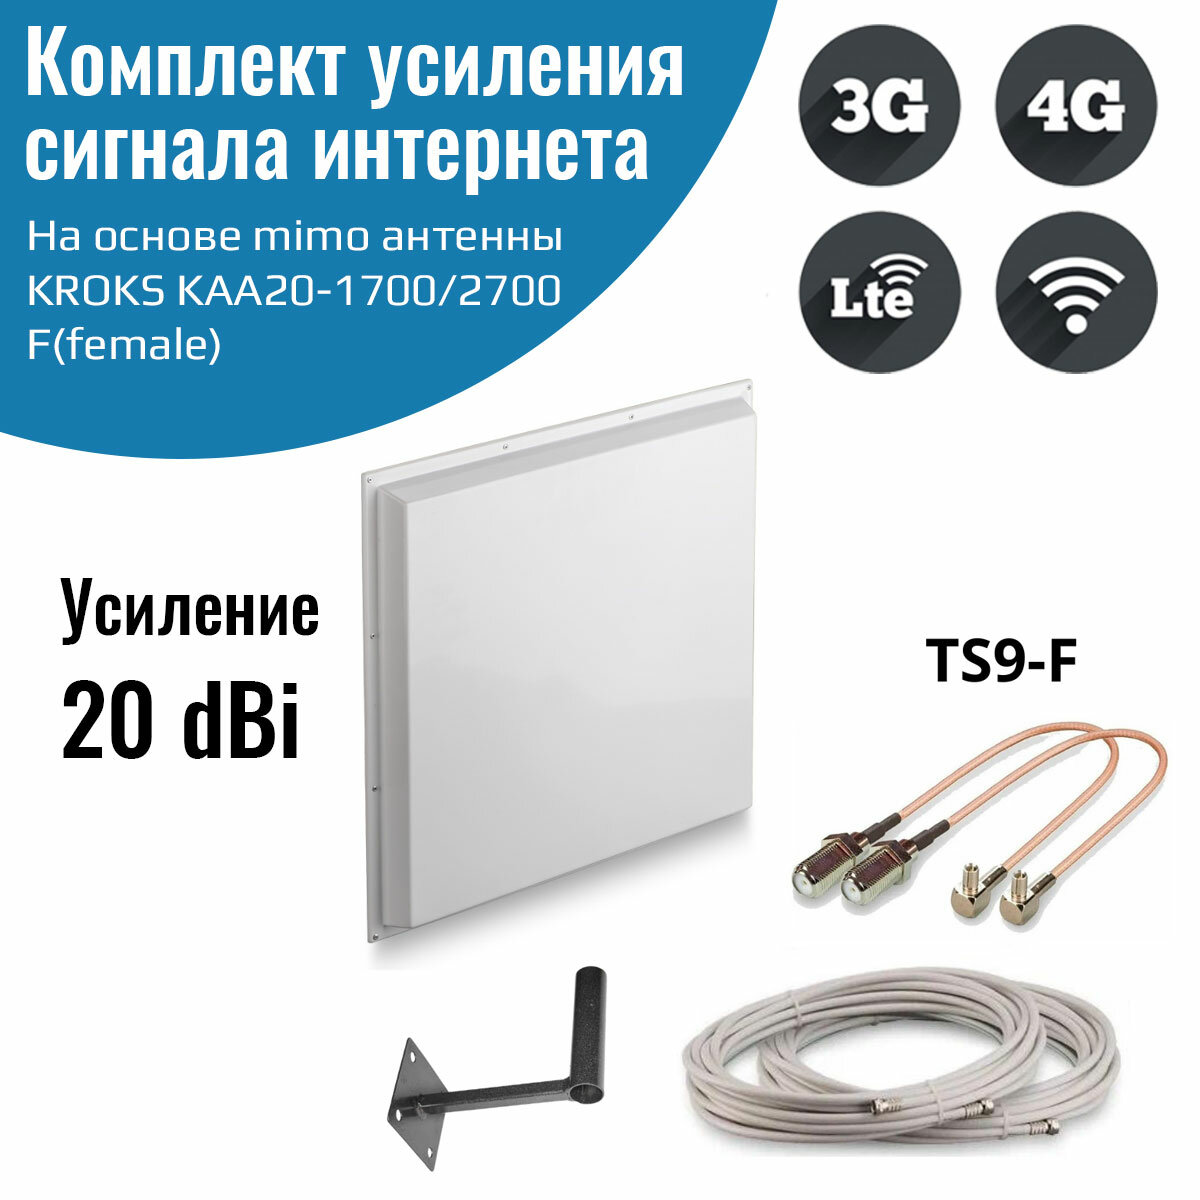 Усилитель интернет сигнала 2G/3G/WiFi/4G антенна KROKS KAA20 MIMO 20 dBi -F + кабель + кронштейн + пигтейлы TS9